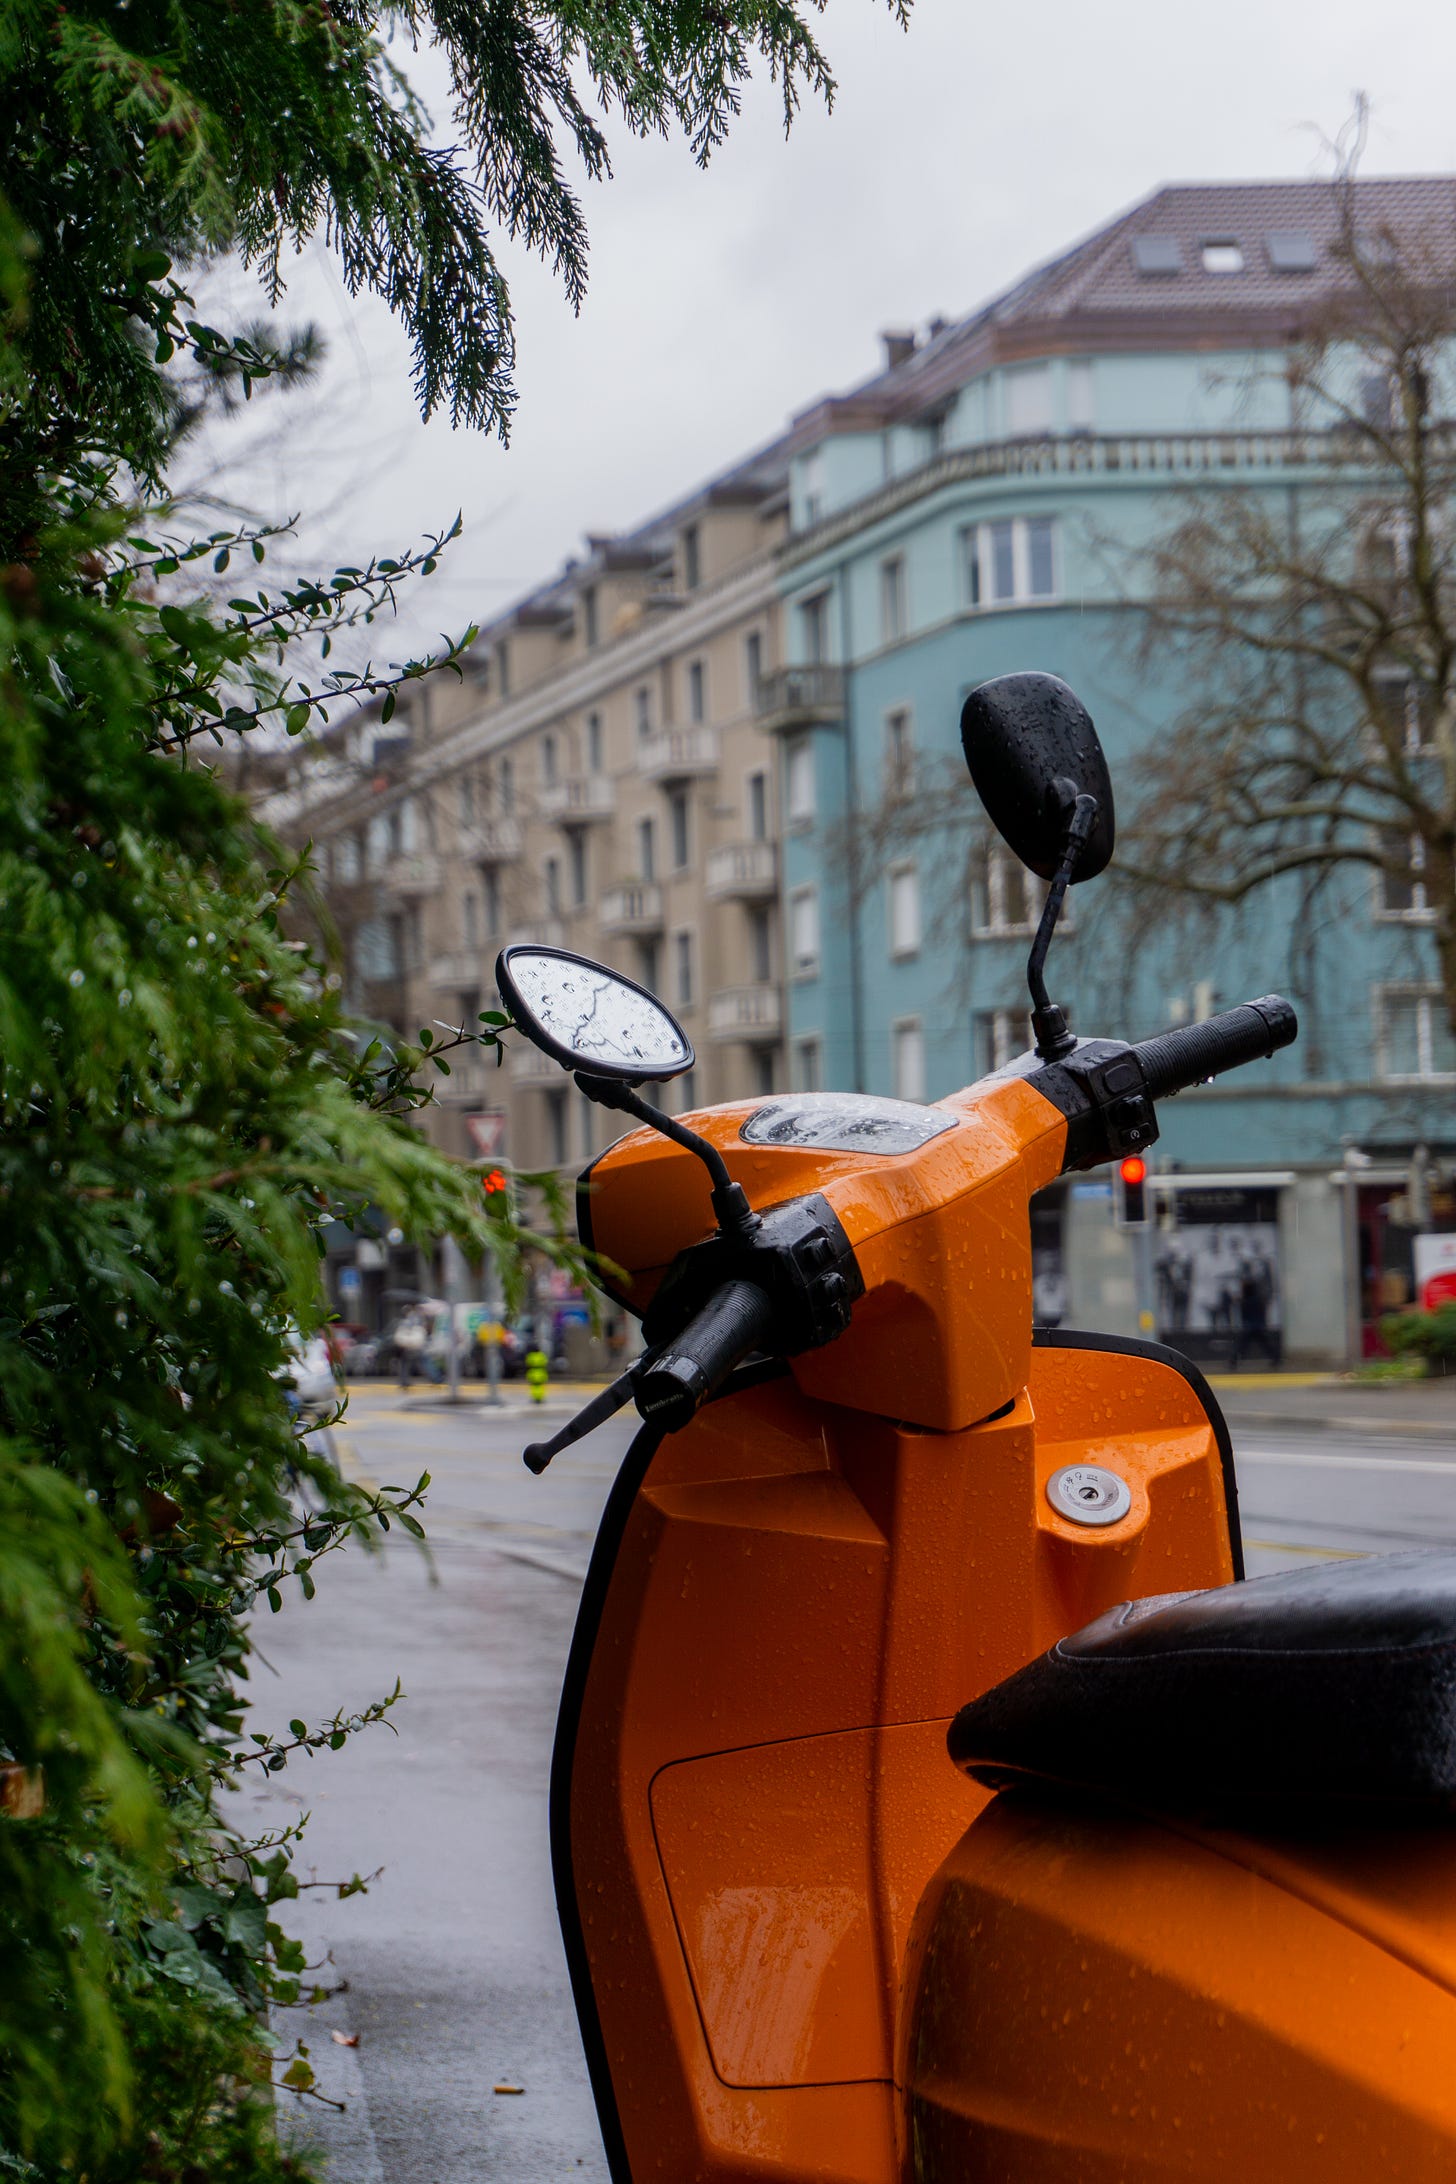 An orange moped